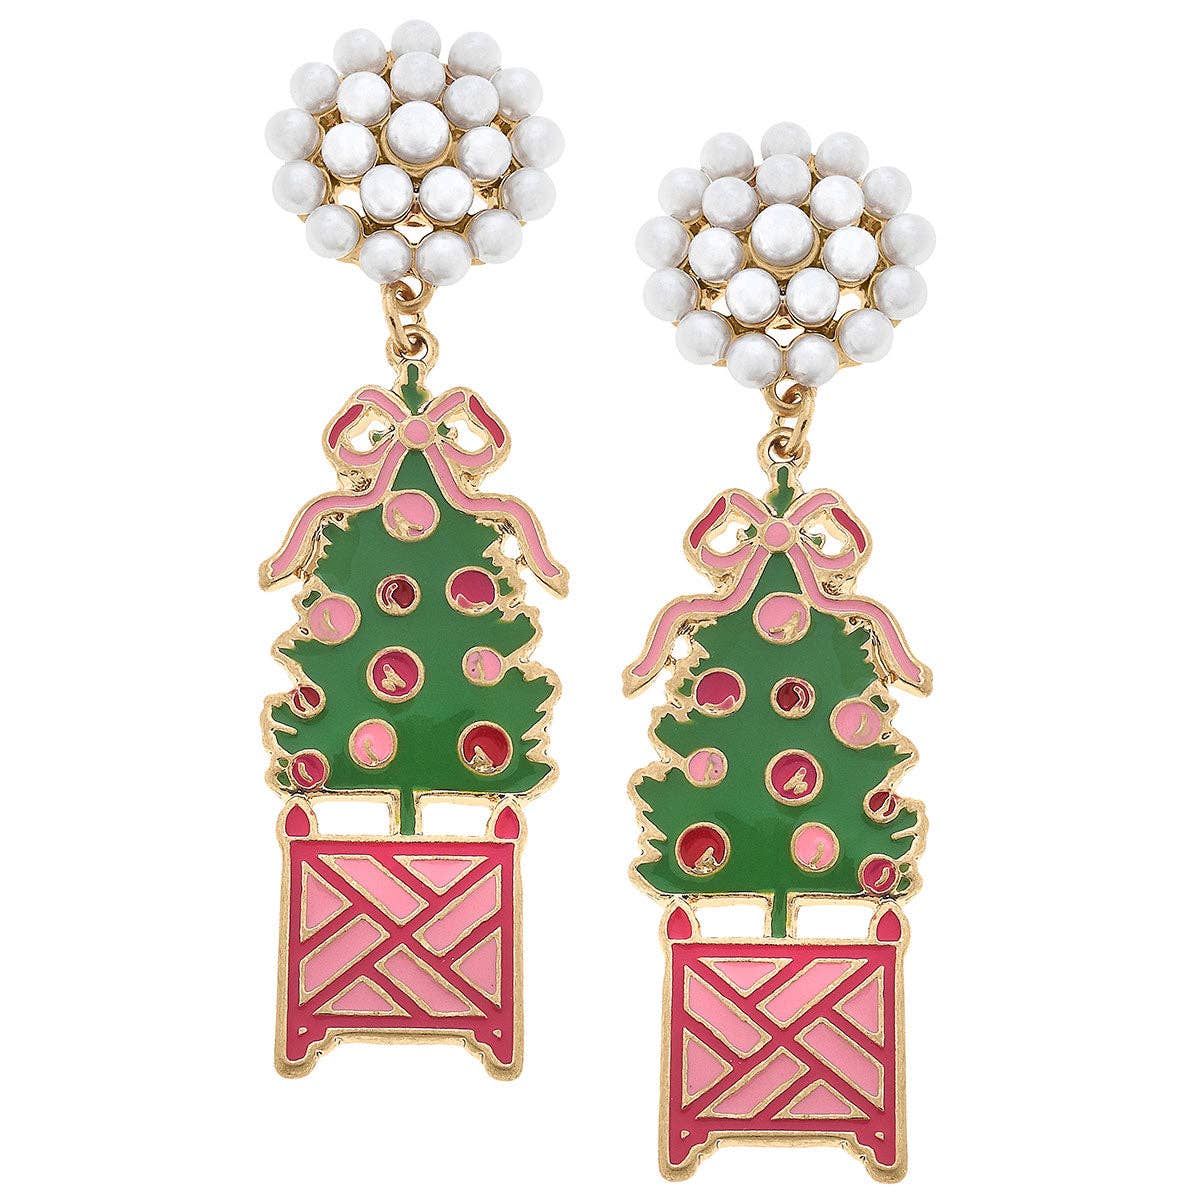 Christmas Tree Topiary Enamel Earrings in Green & Pink - Pretty Crafty Lady Shop